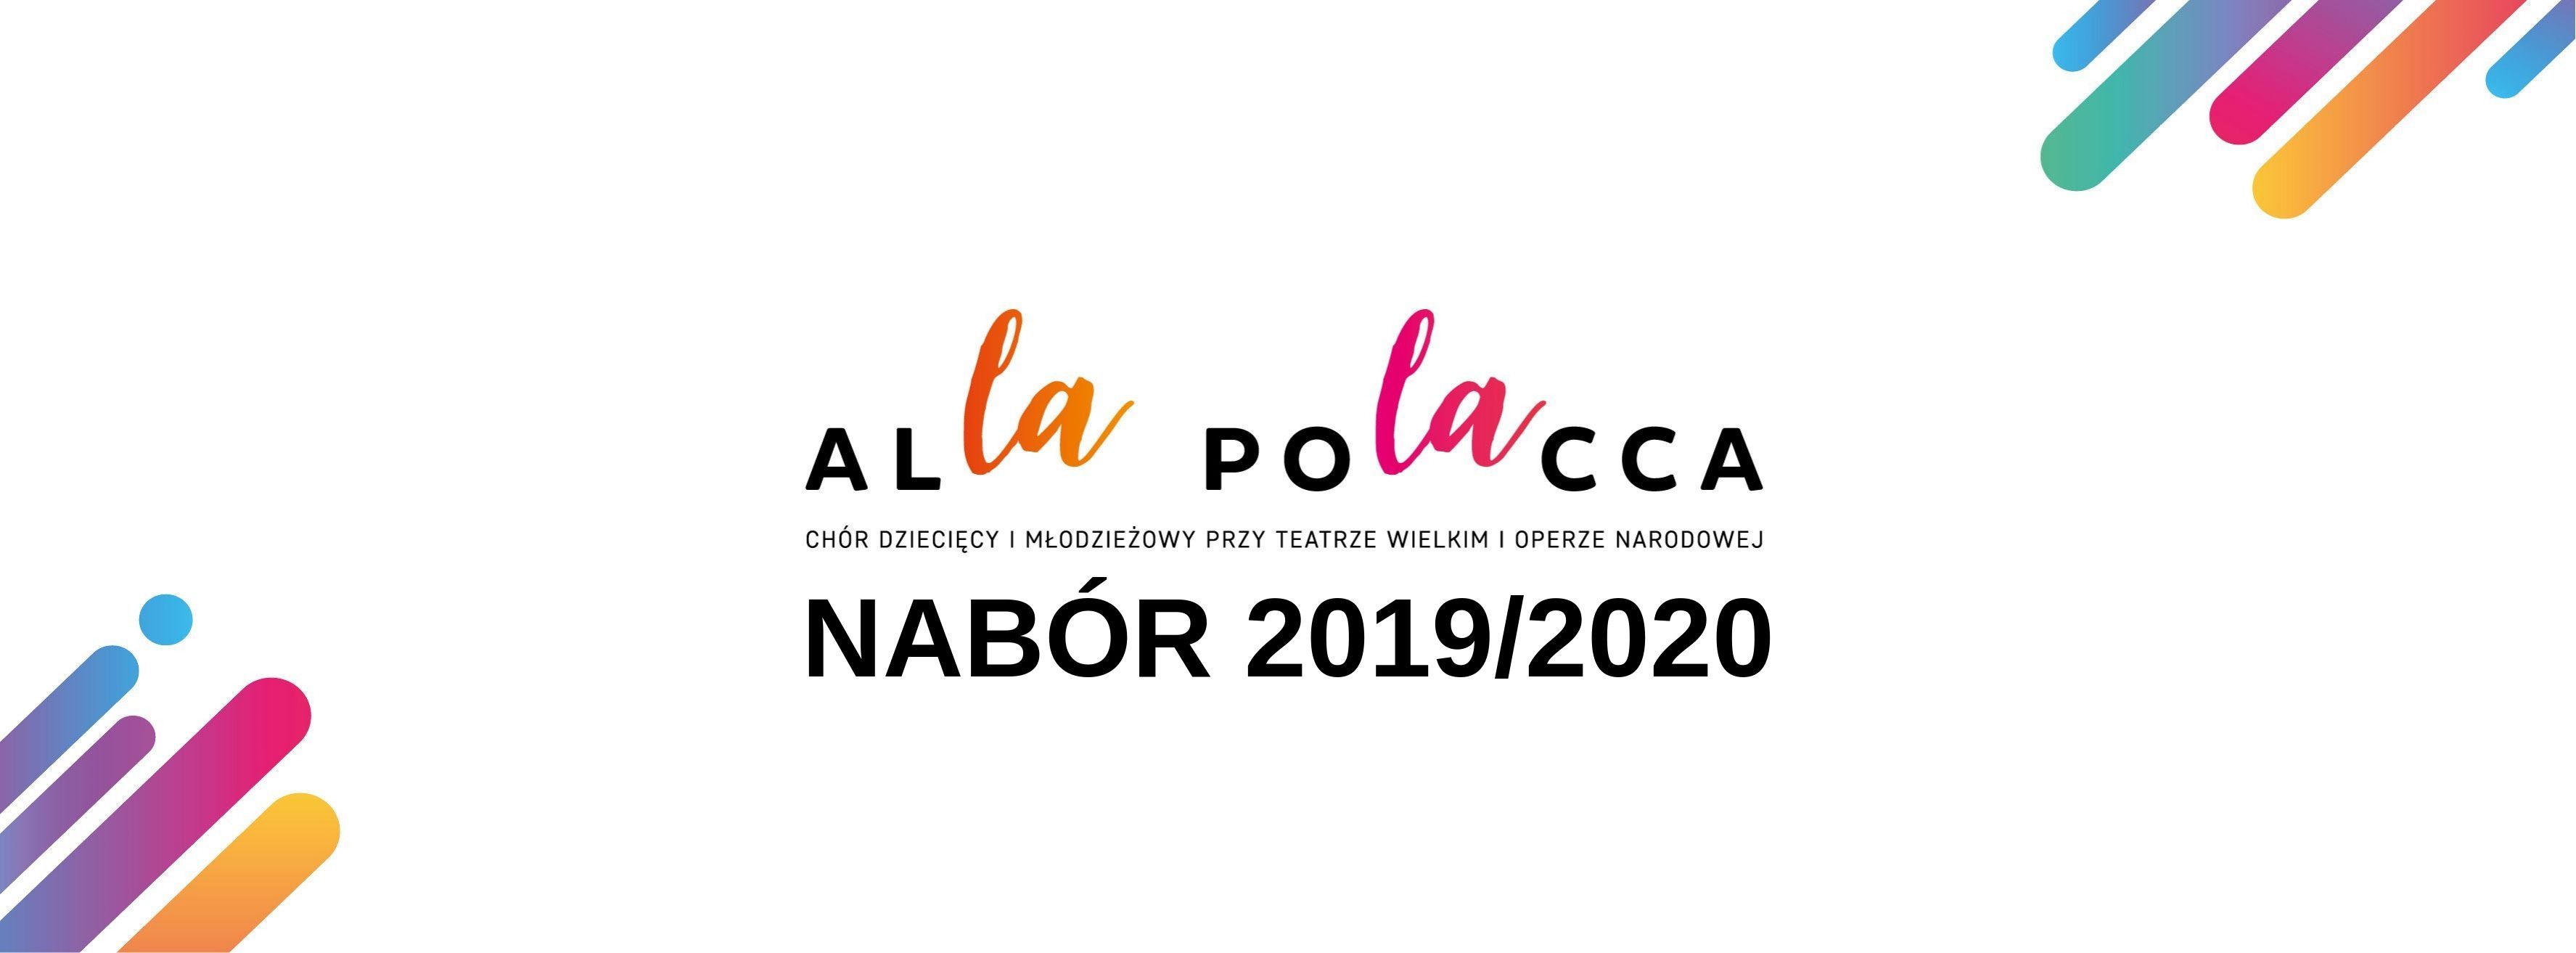 Dołącz do Chóru Alla Polacca – nabór 2019/2020